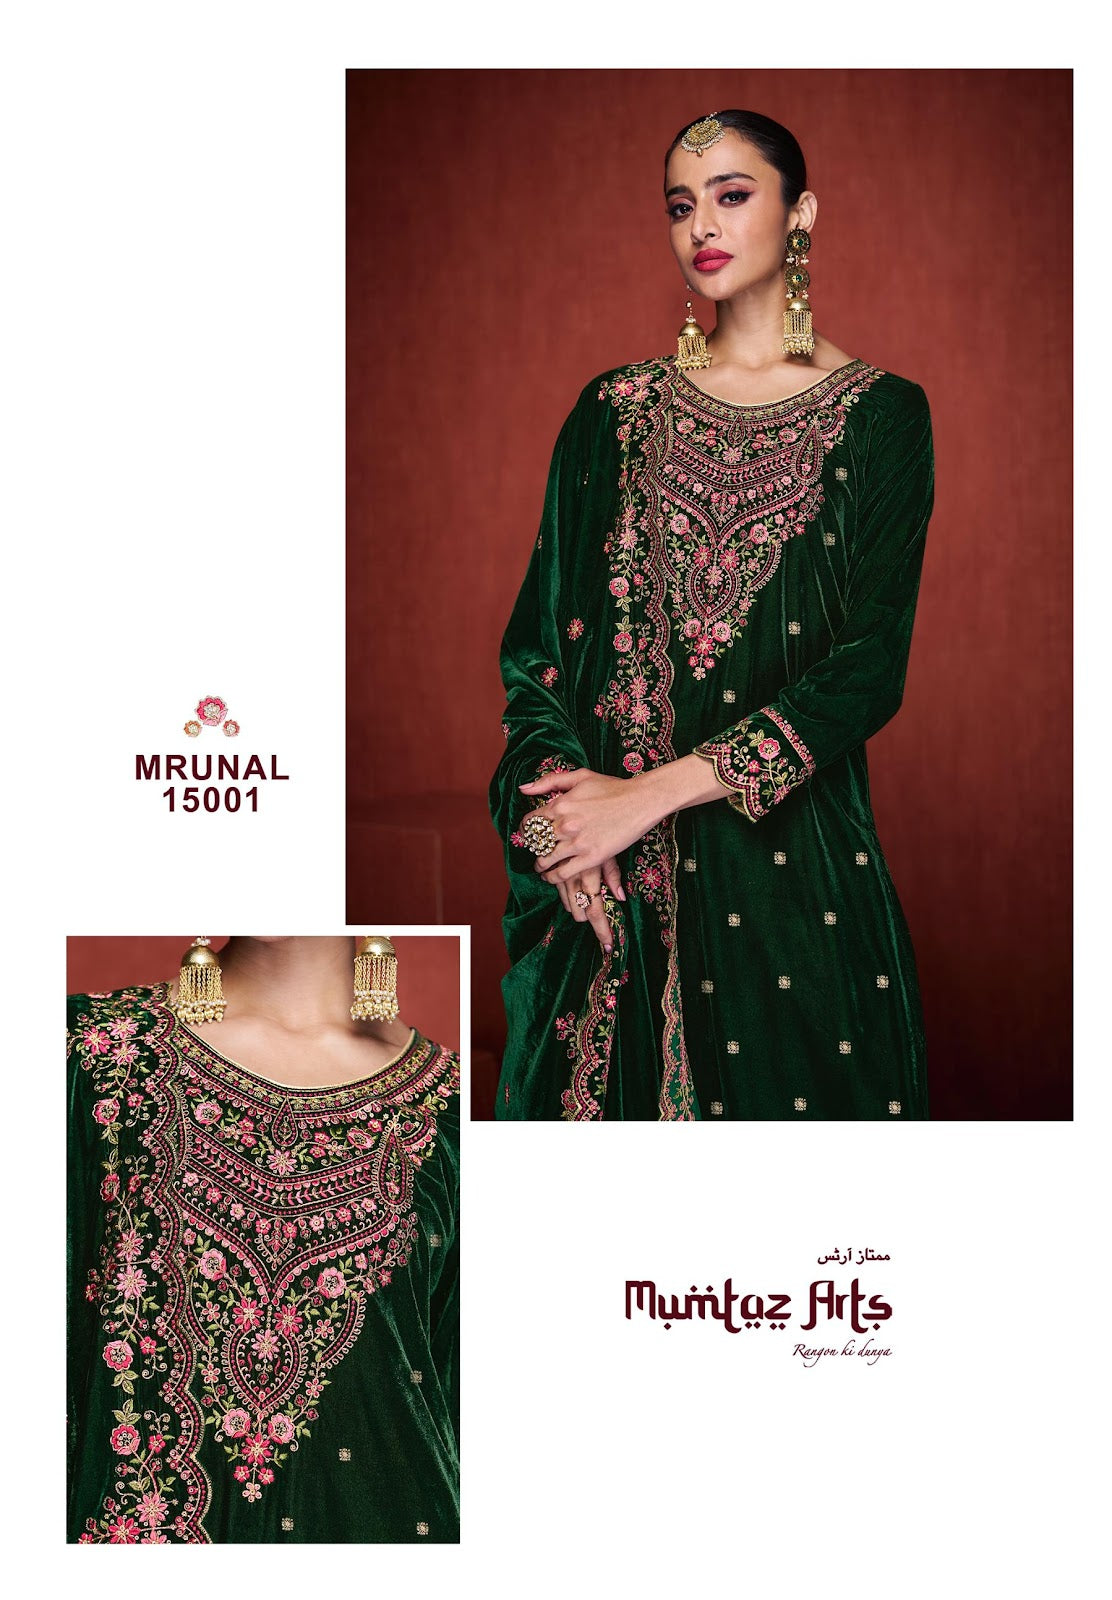 Mrunal Mumtaz Arts Velvet Suits